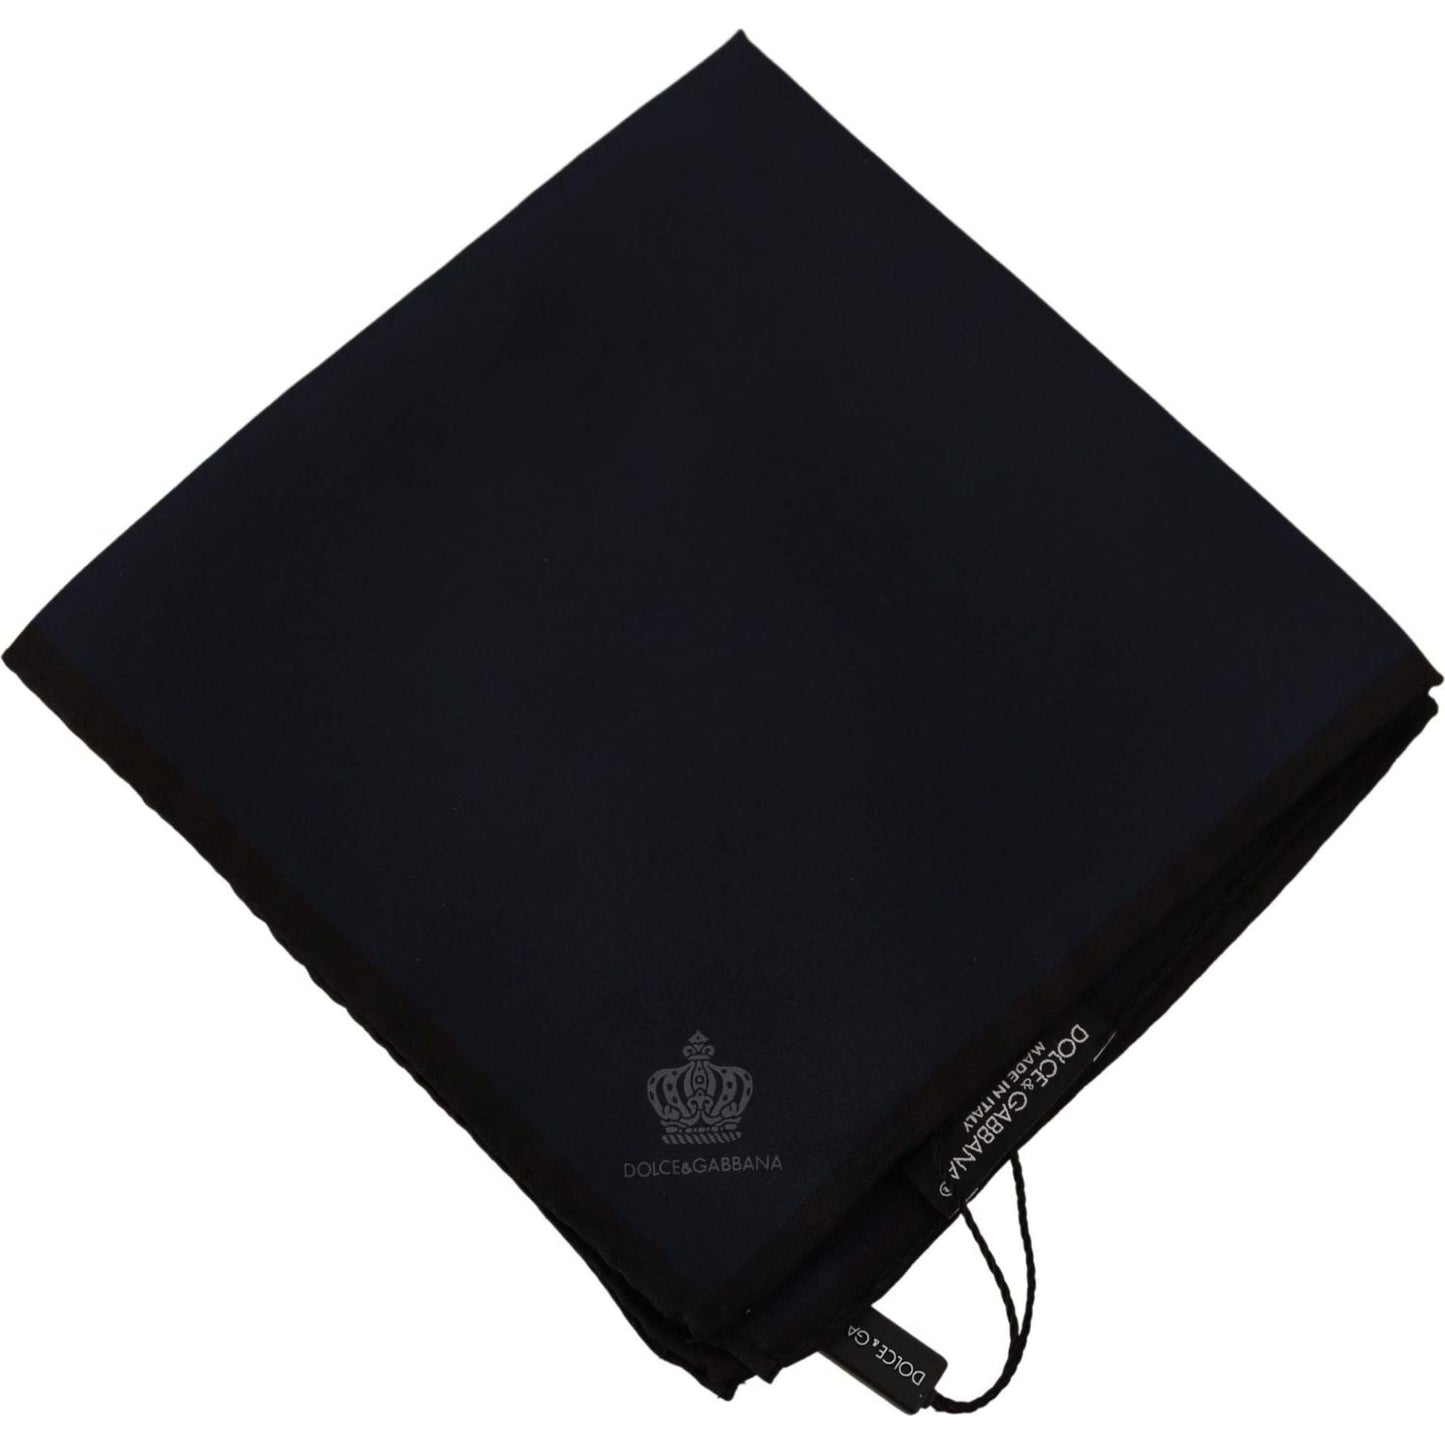 Dolce & Gabbana Elegant Silk Black Pocket Square Handkerchief black-square-handkerchief-100-silk-scarf IMG_8152-scaled-cce8de3e-dd8.jpg